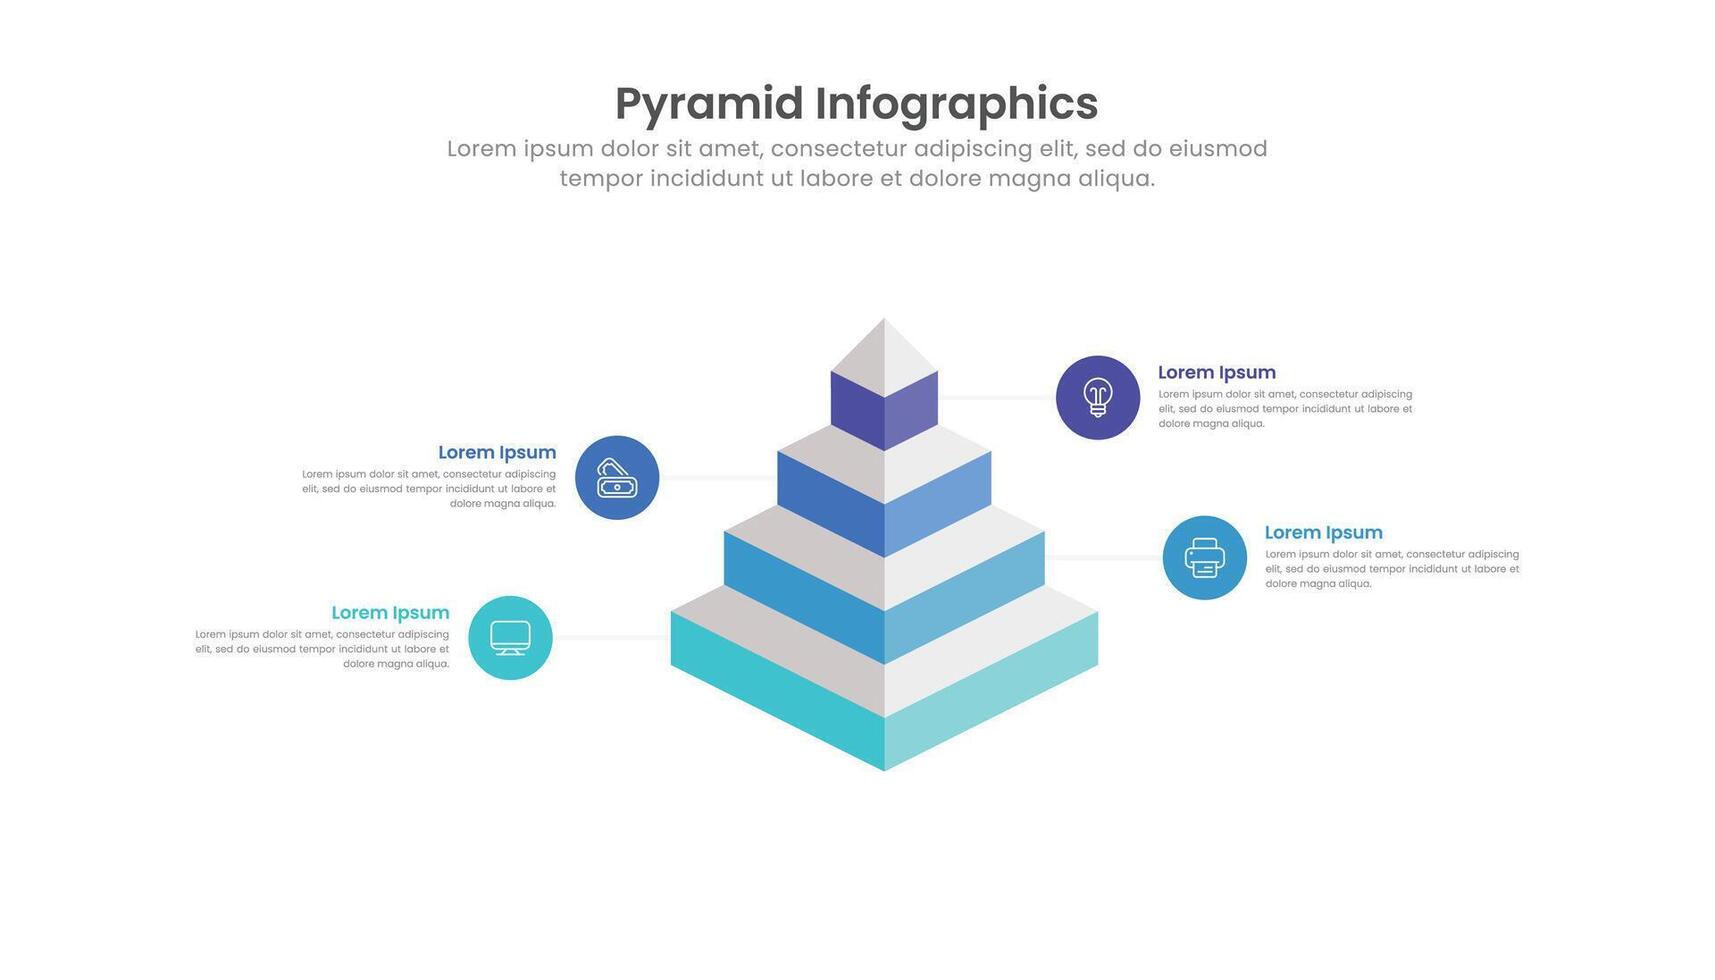 pirâmide diagrama infográfico modelo Projeto com 4 níveis e ícones vetor